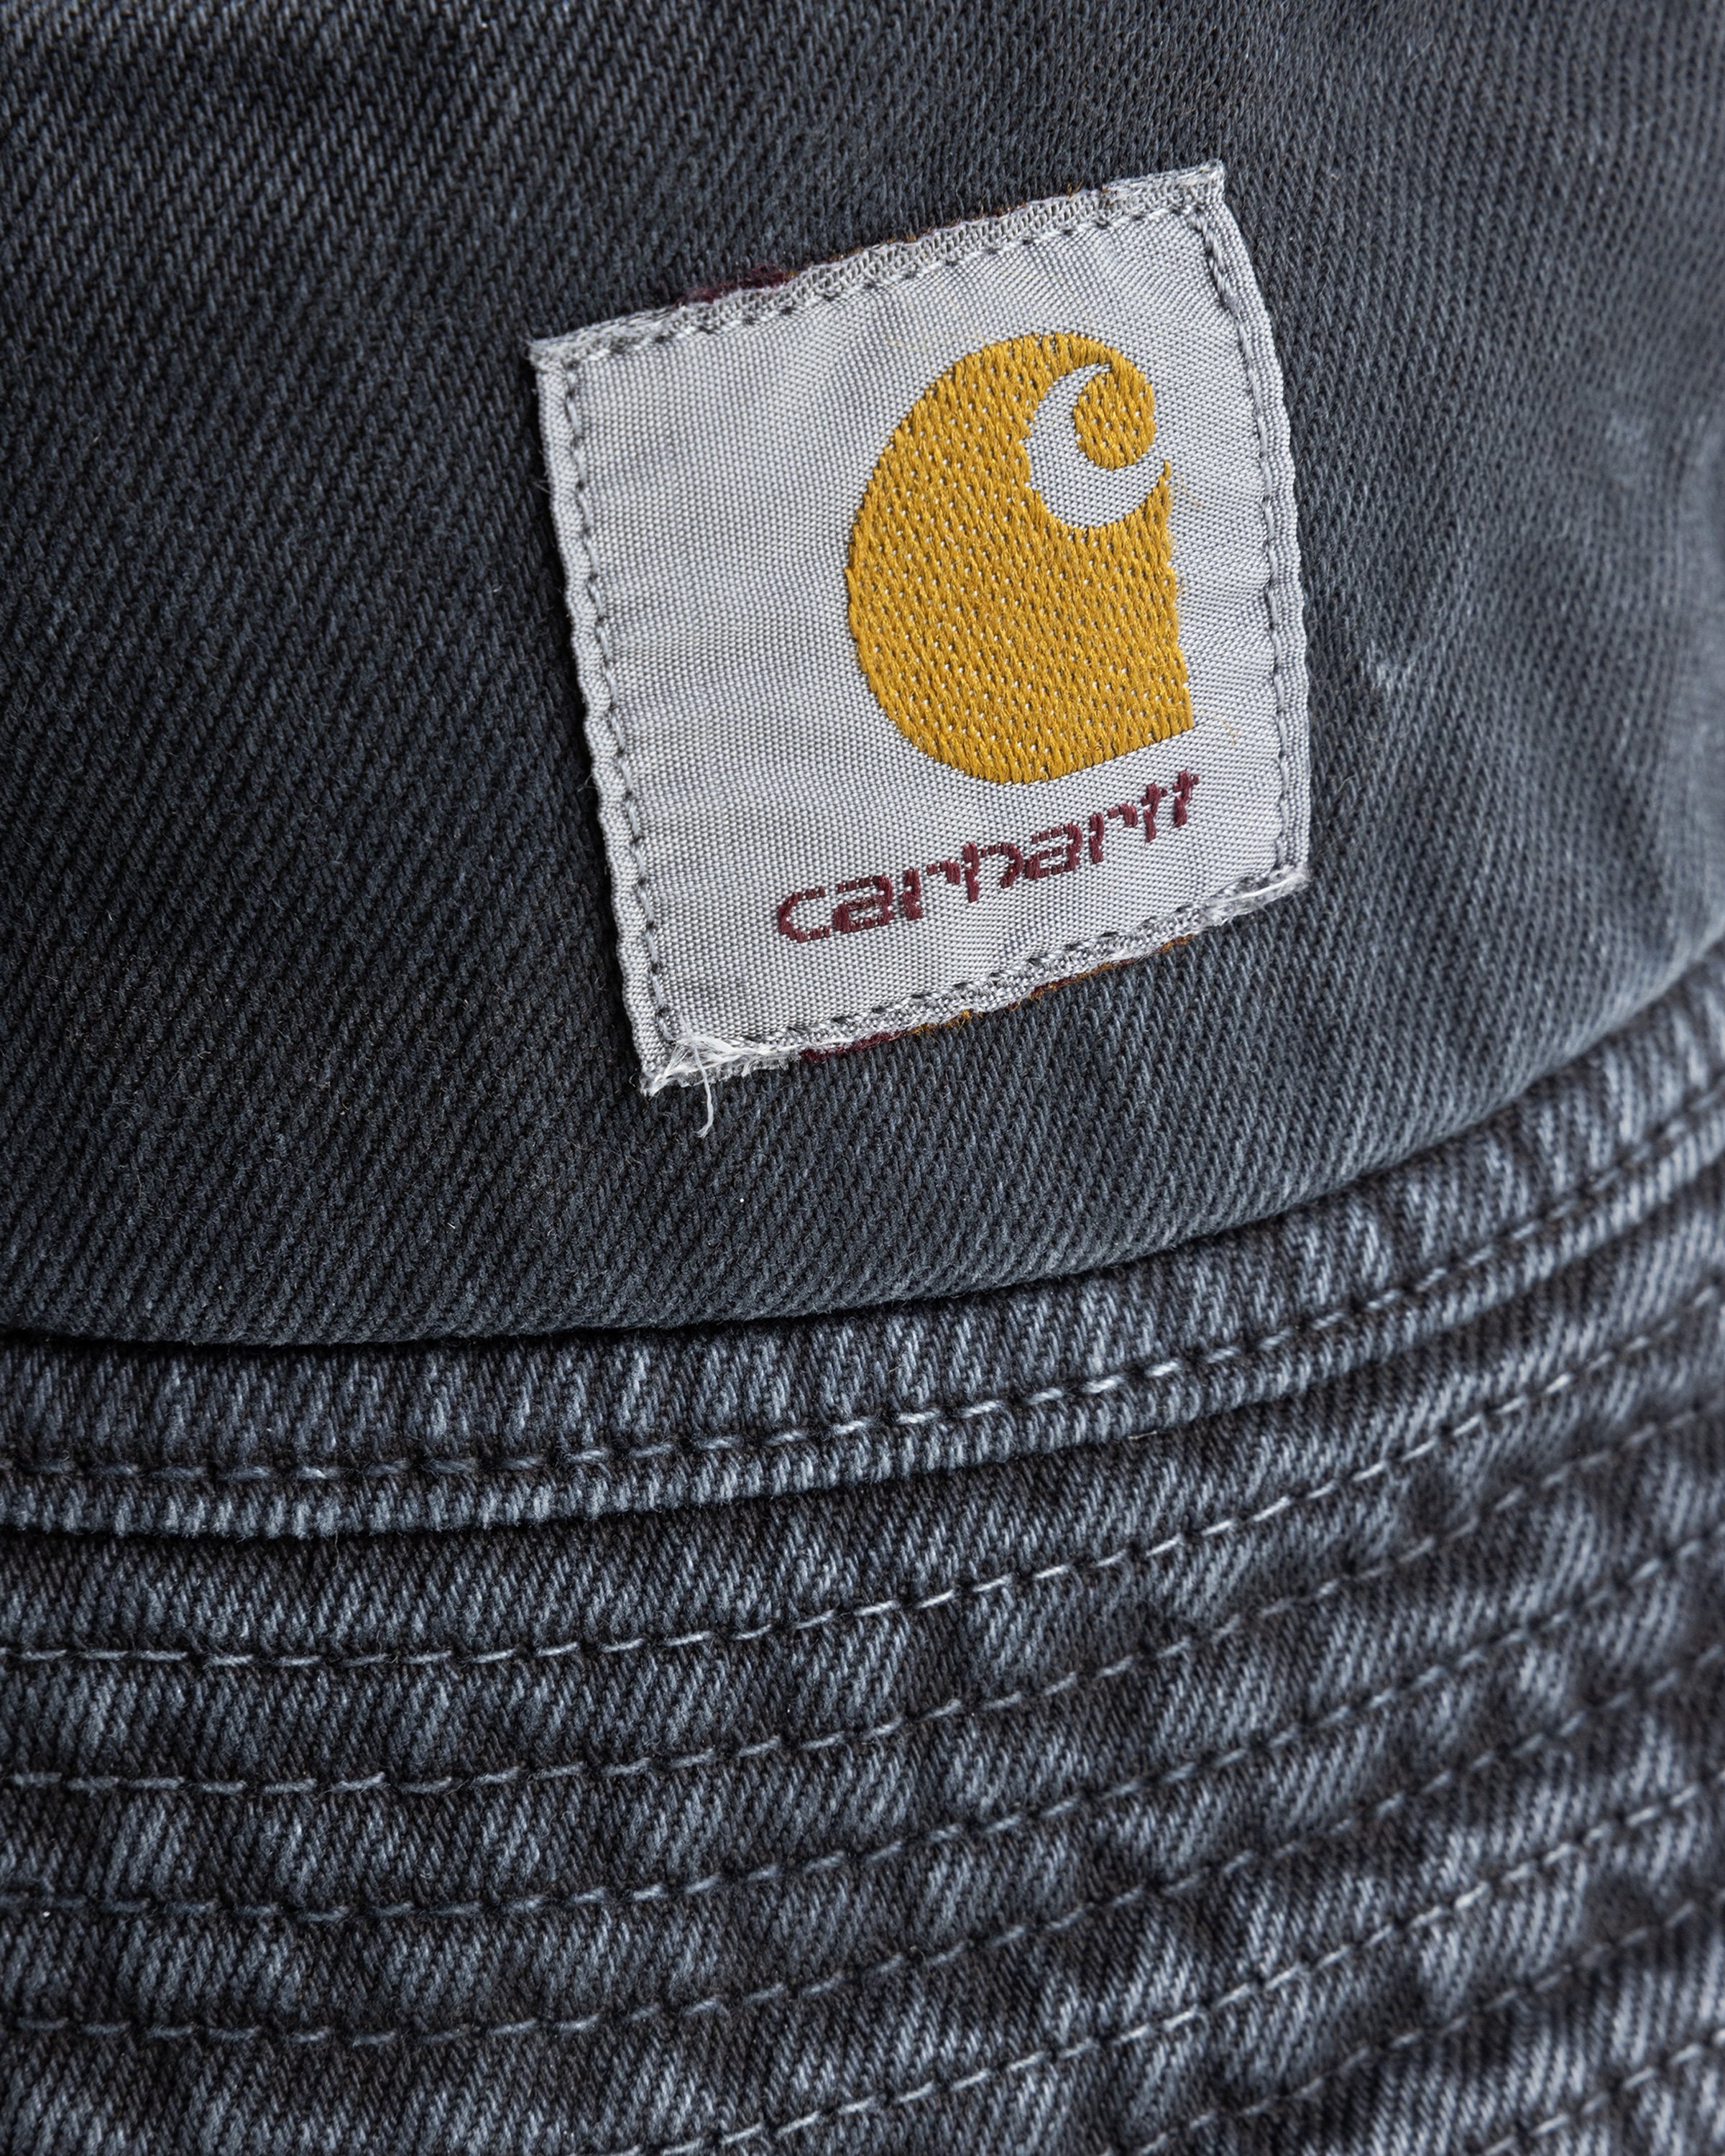 Carhartt WIP - Garrison Bucket Hat Black /stone dyed - Accessories - Black - Image 4